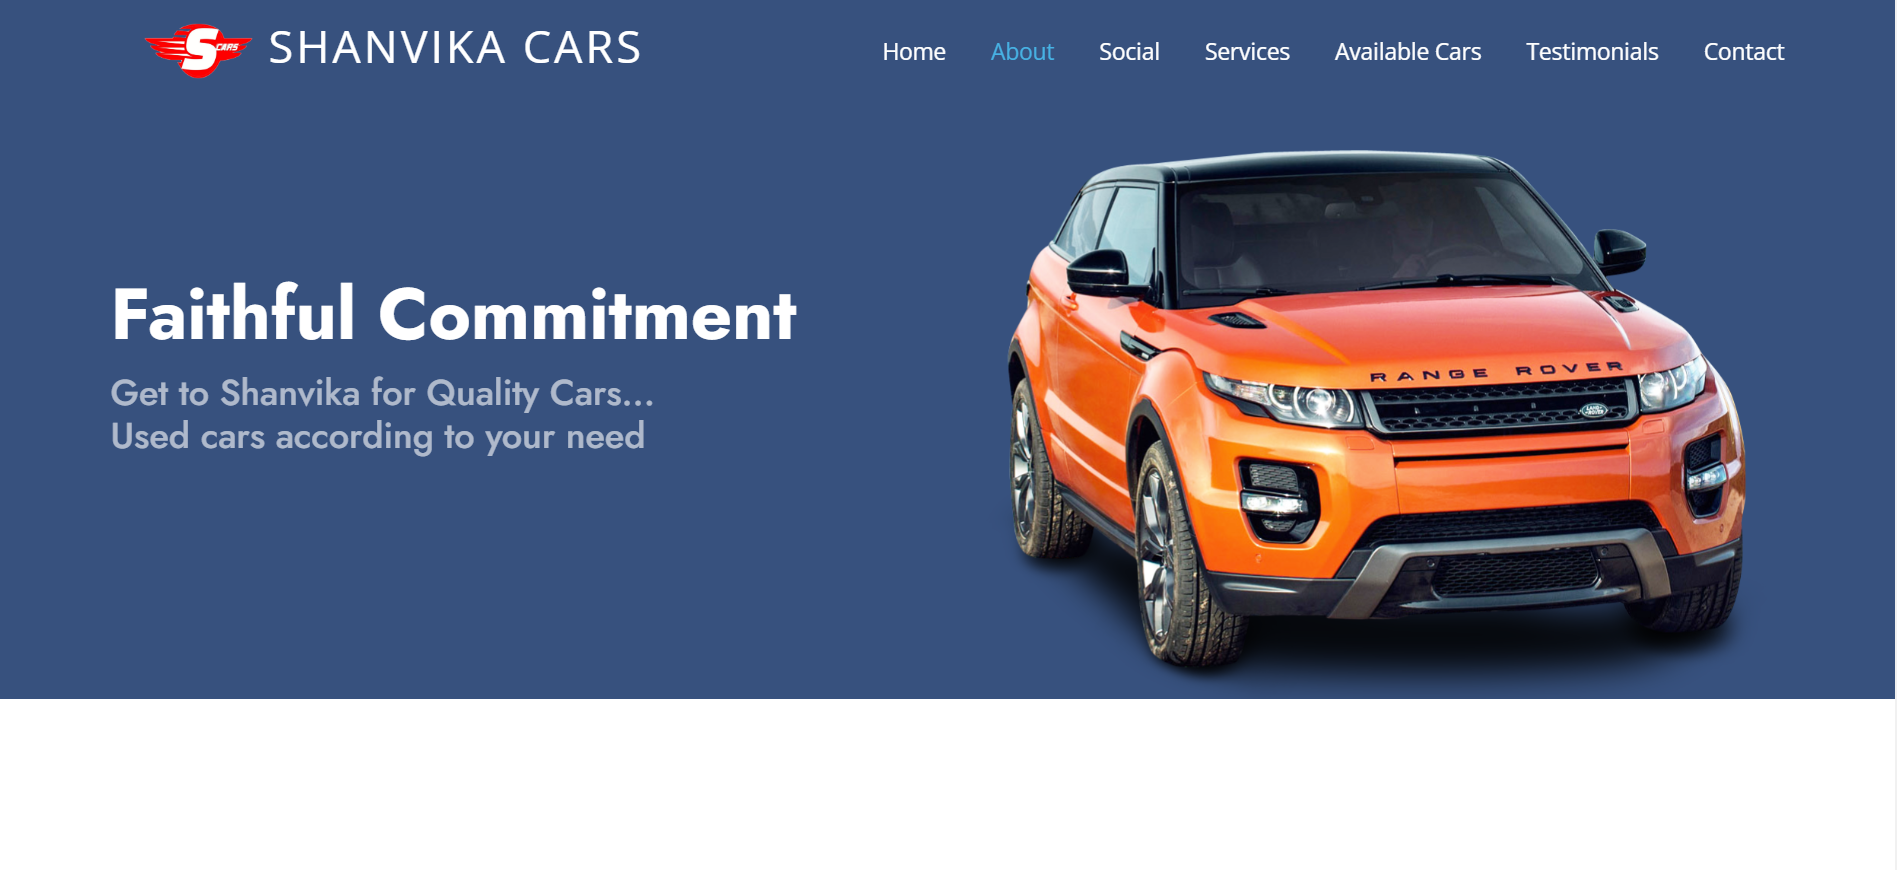 Shanvika Cars Website